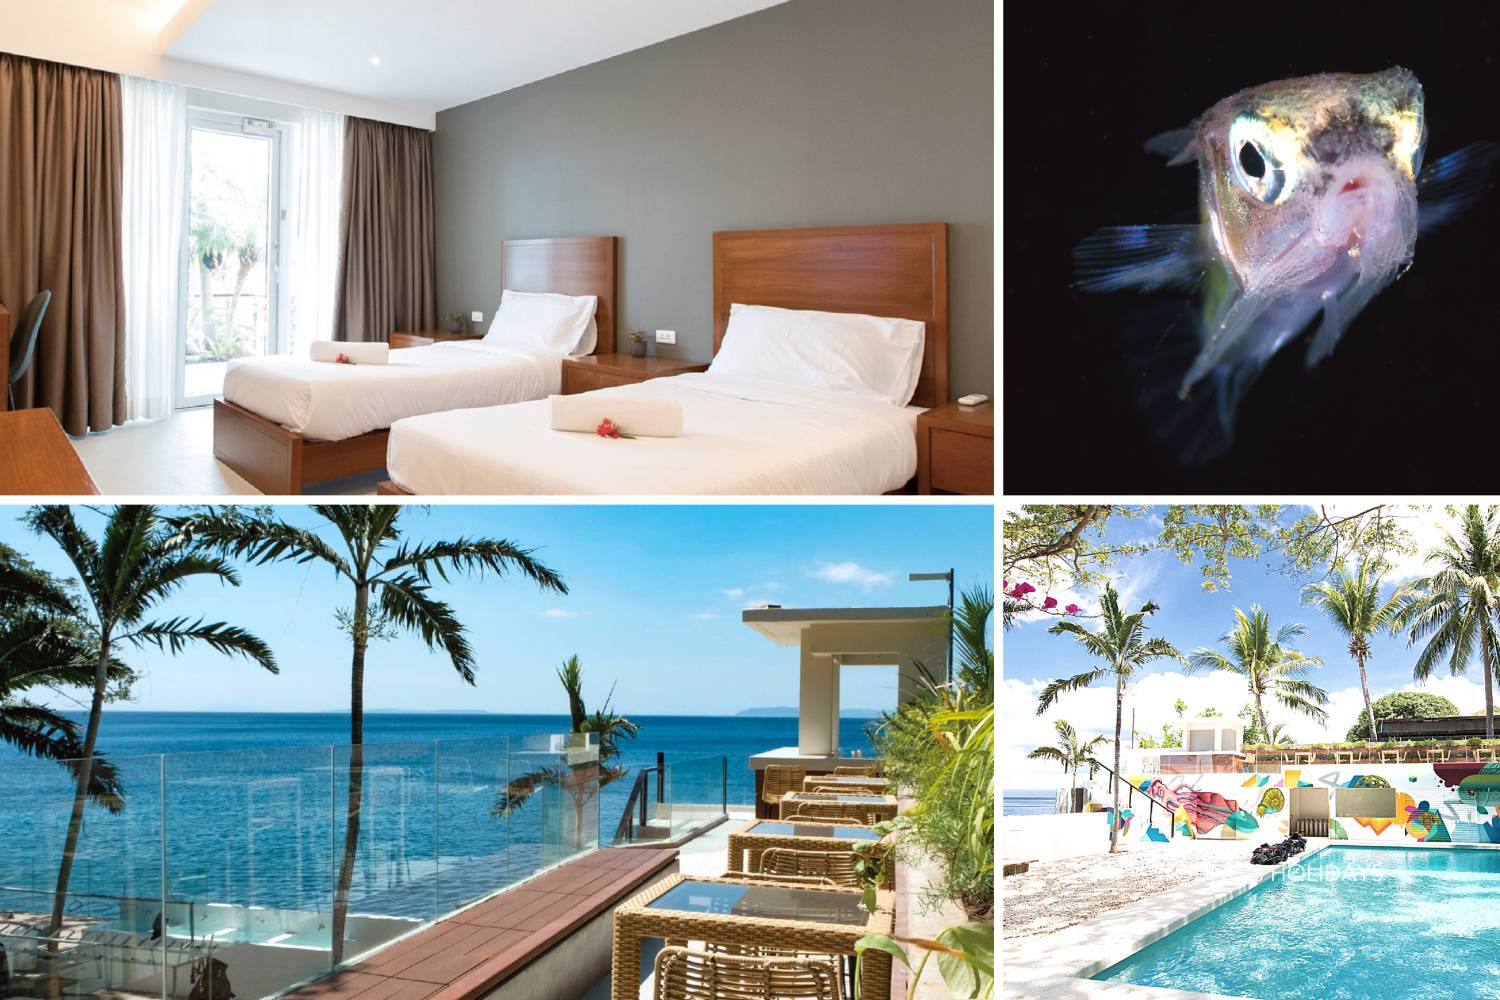 【Anilao】Solitude Acacia Resort Beach & Dive 5 days 4 nights package